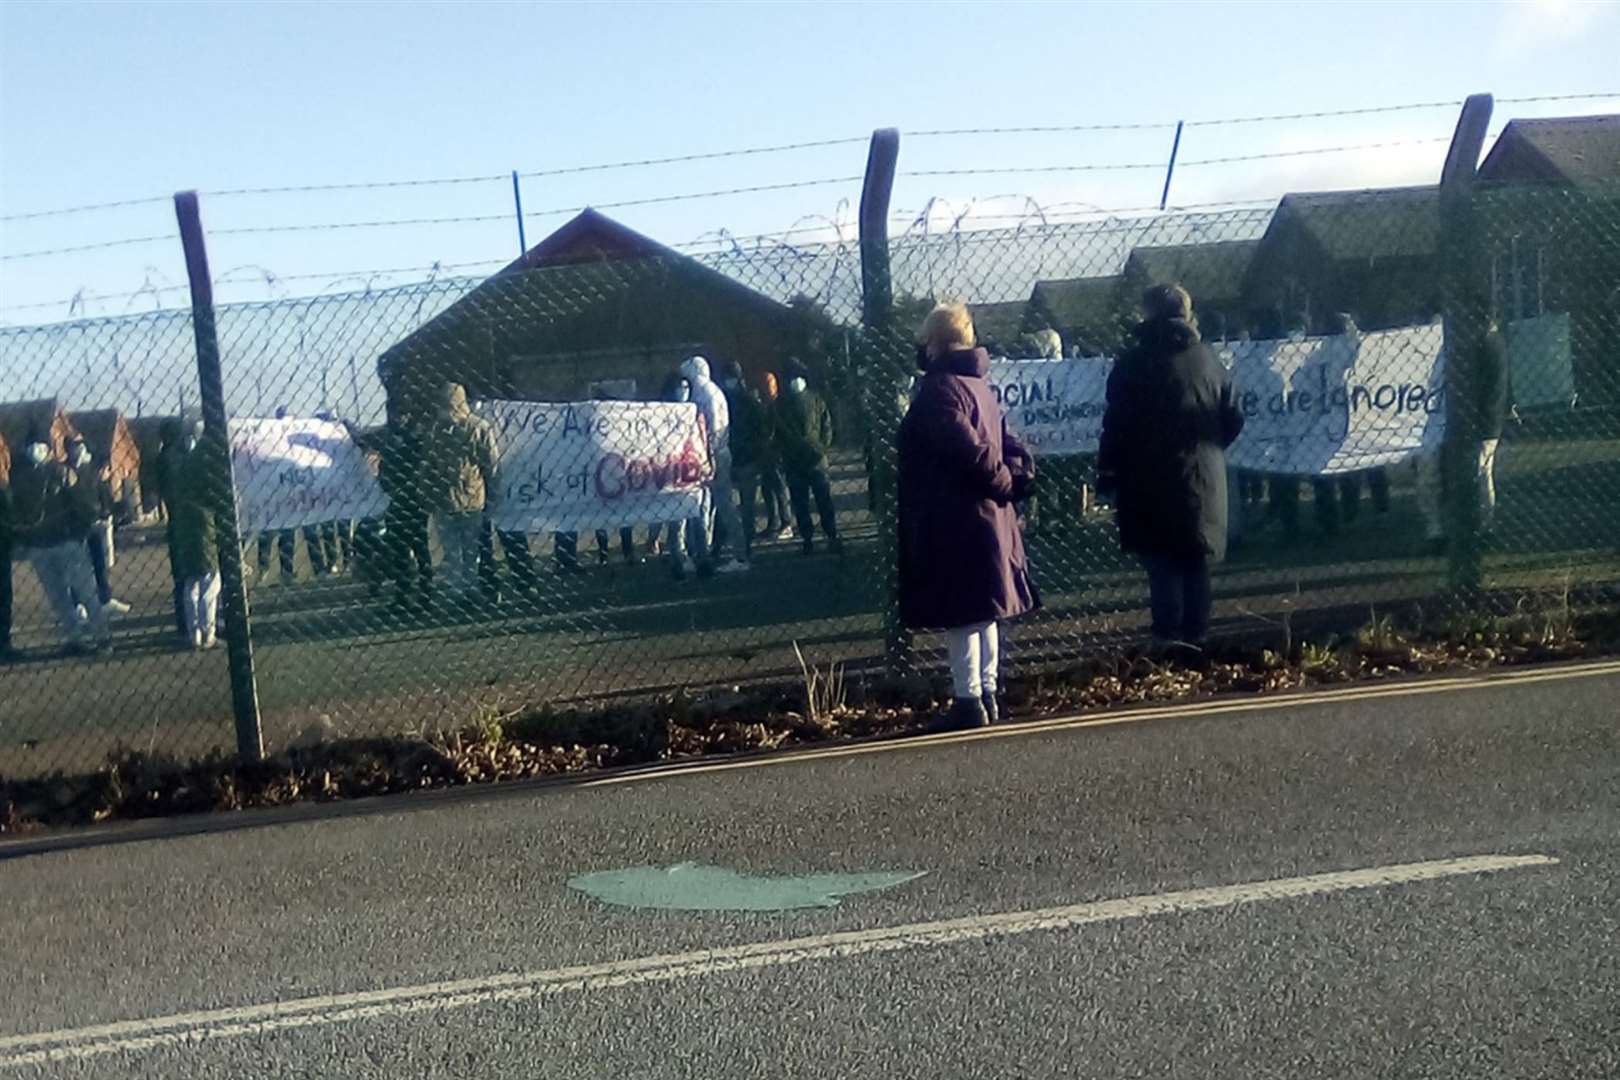 People seeking asylum protesting at Napier Barracks in December